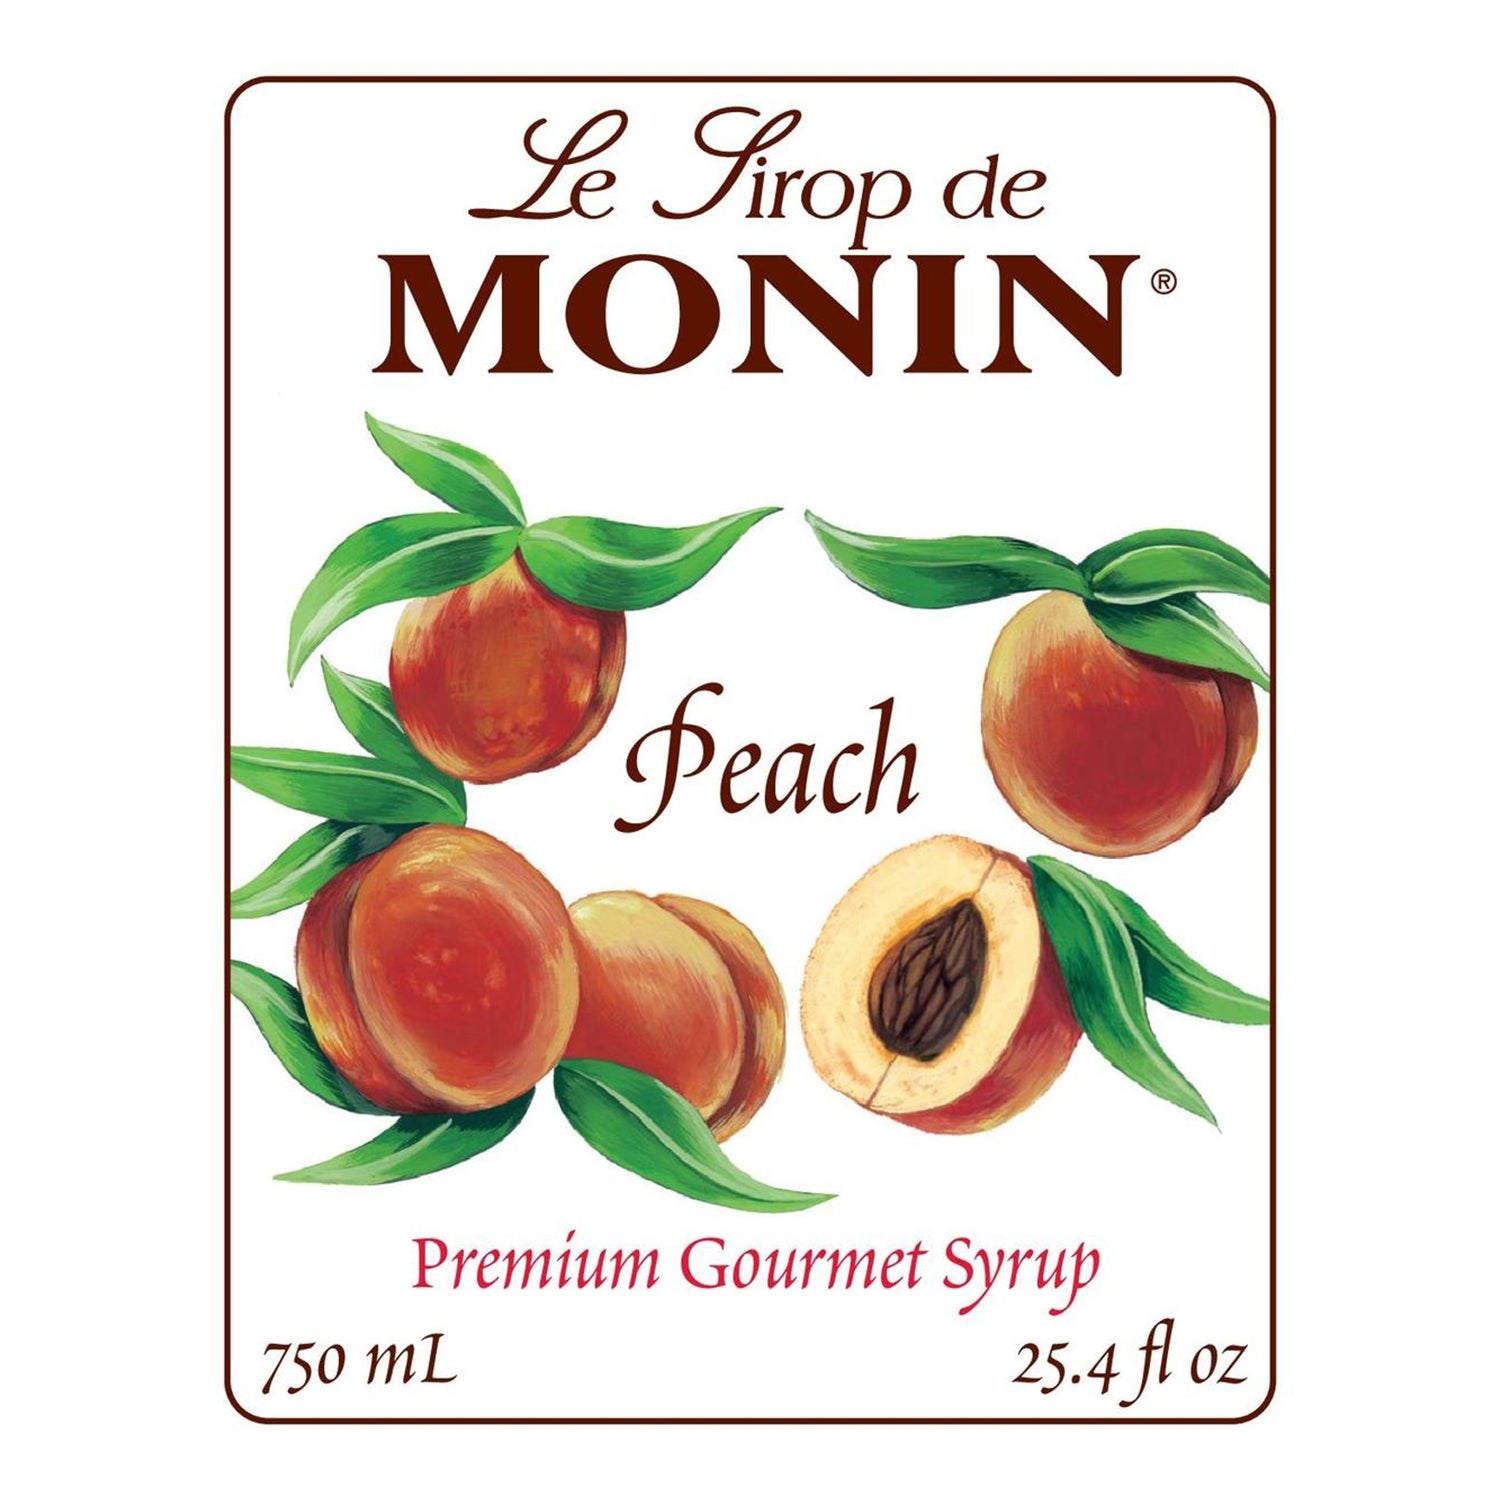 Monin Peach Syrup - Bottle (750mL)